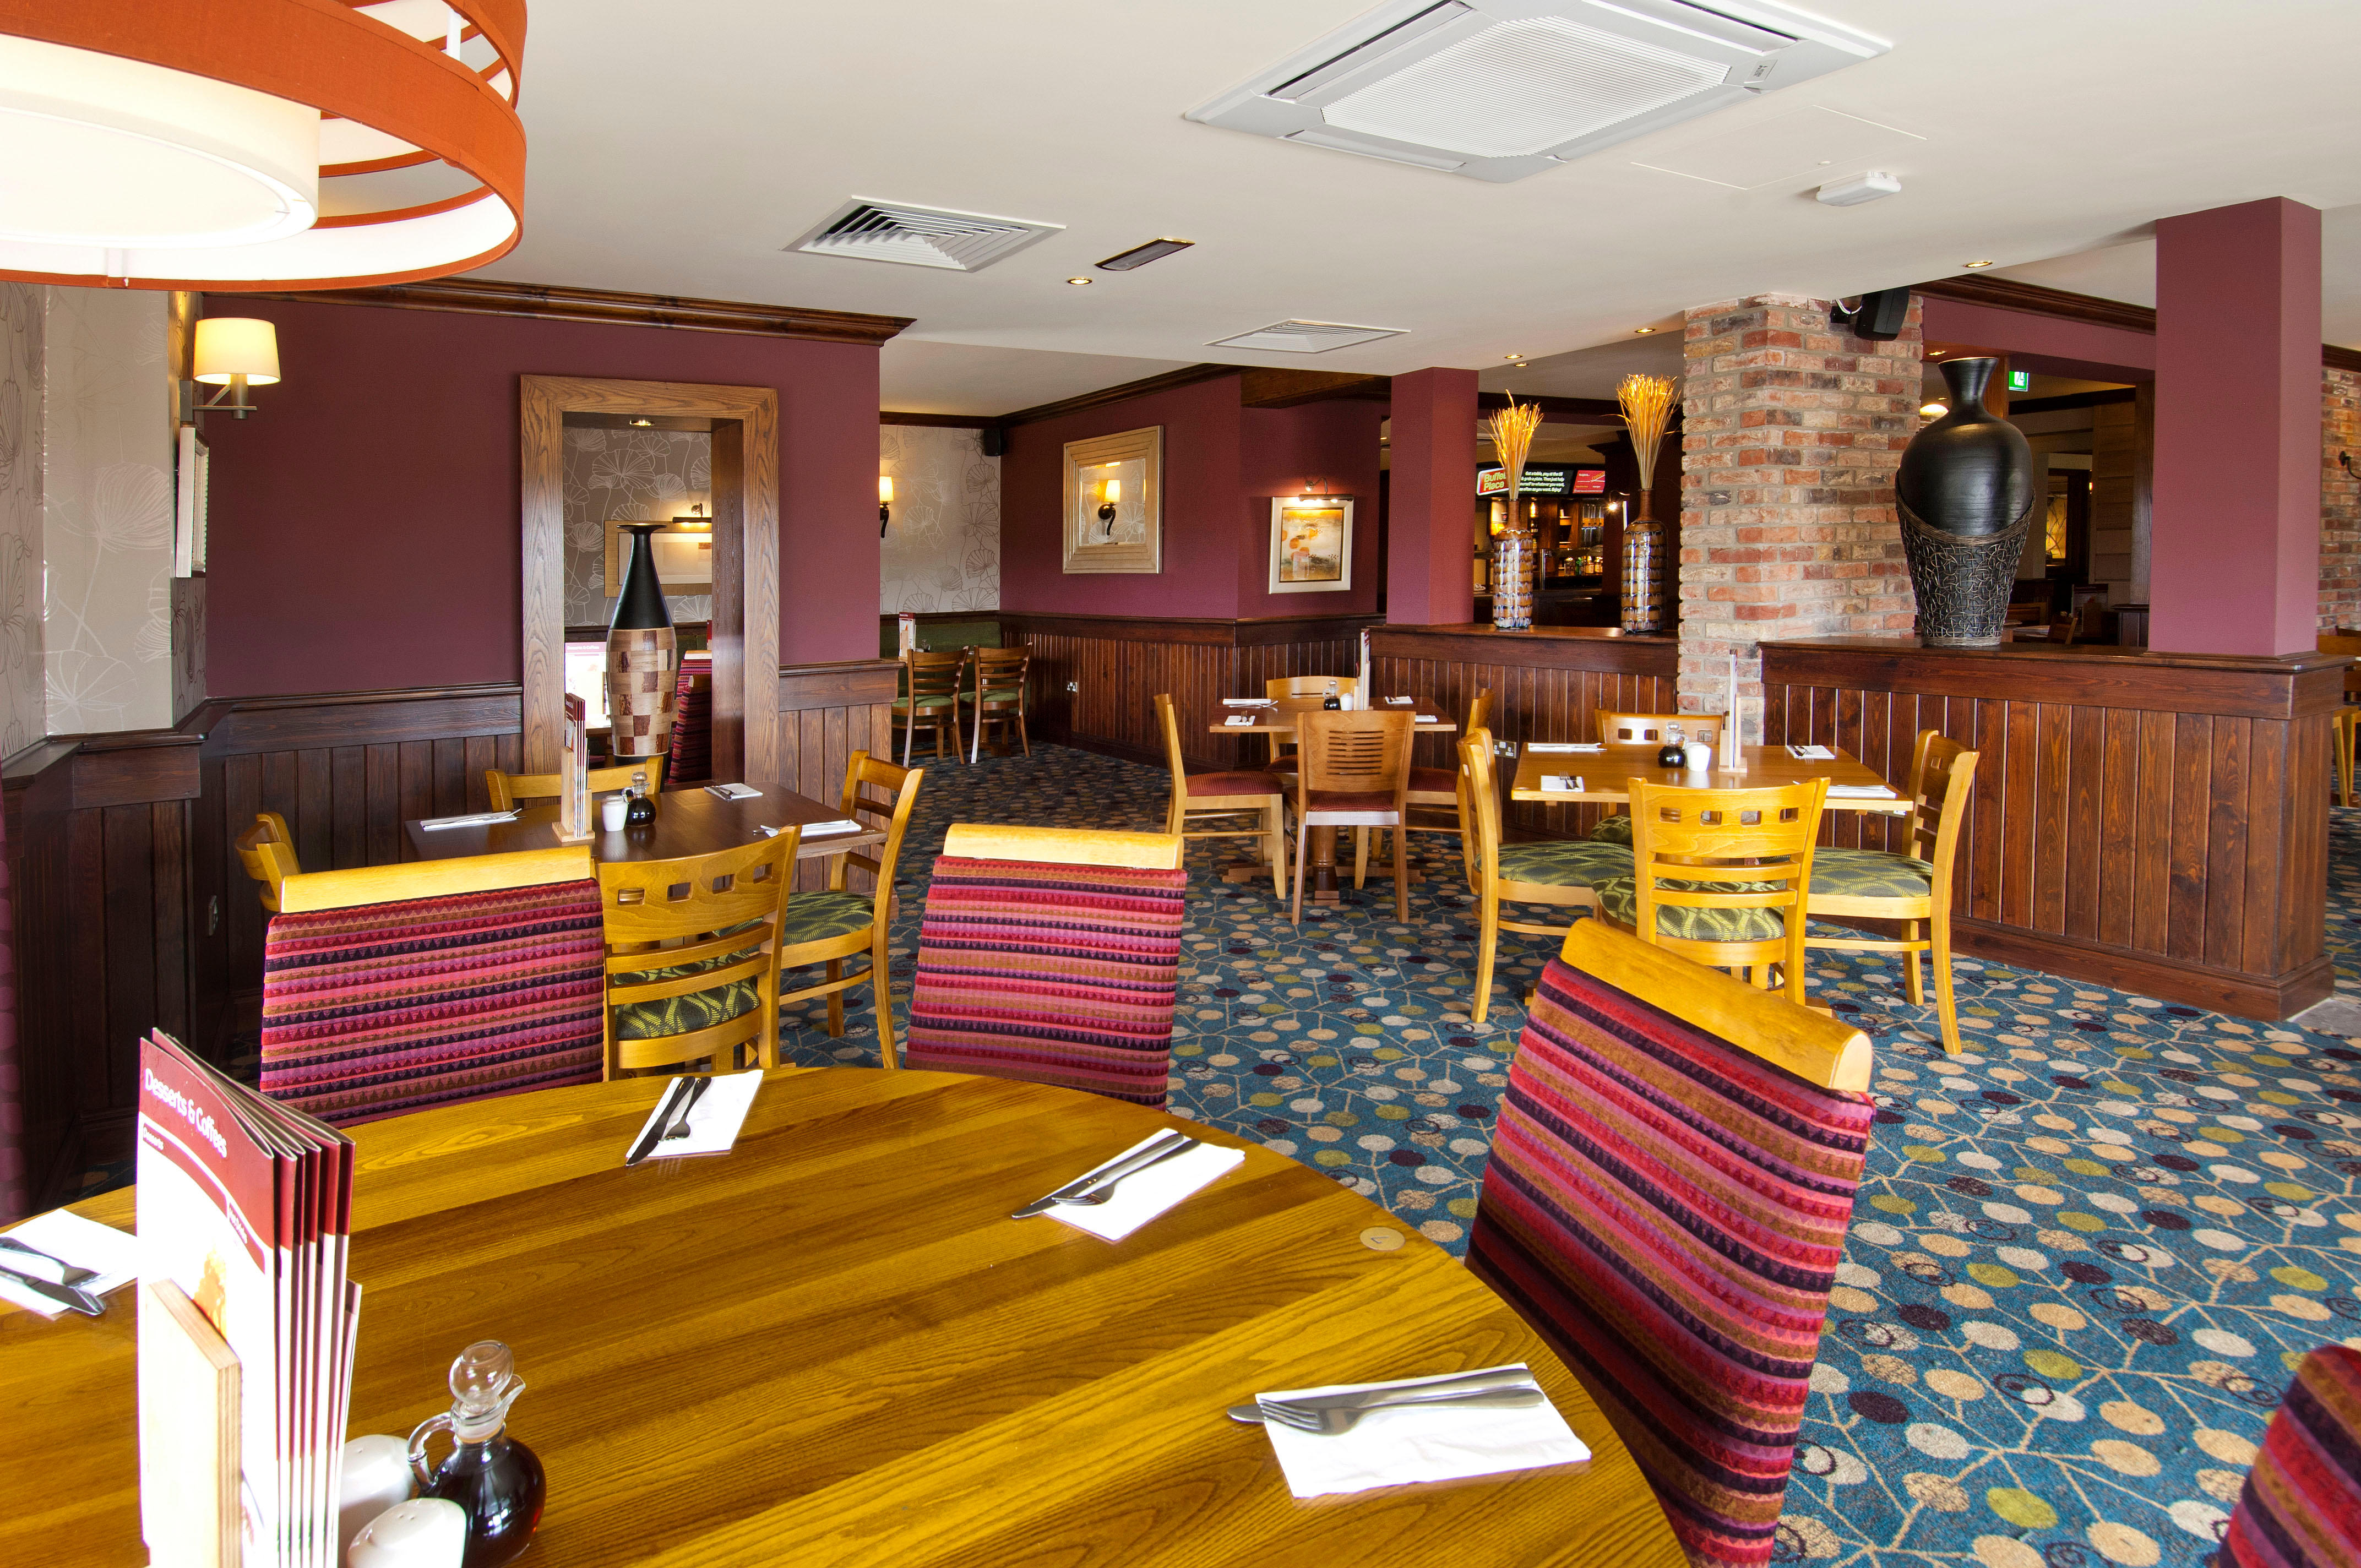 Brewers Fayre restaurant interior Premier Inn Bedford South (A421) hotel Bedford 03333 219301